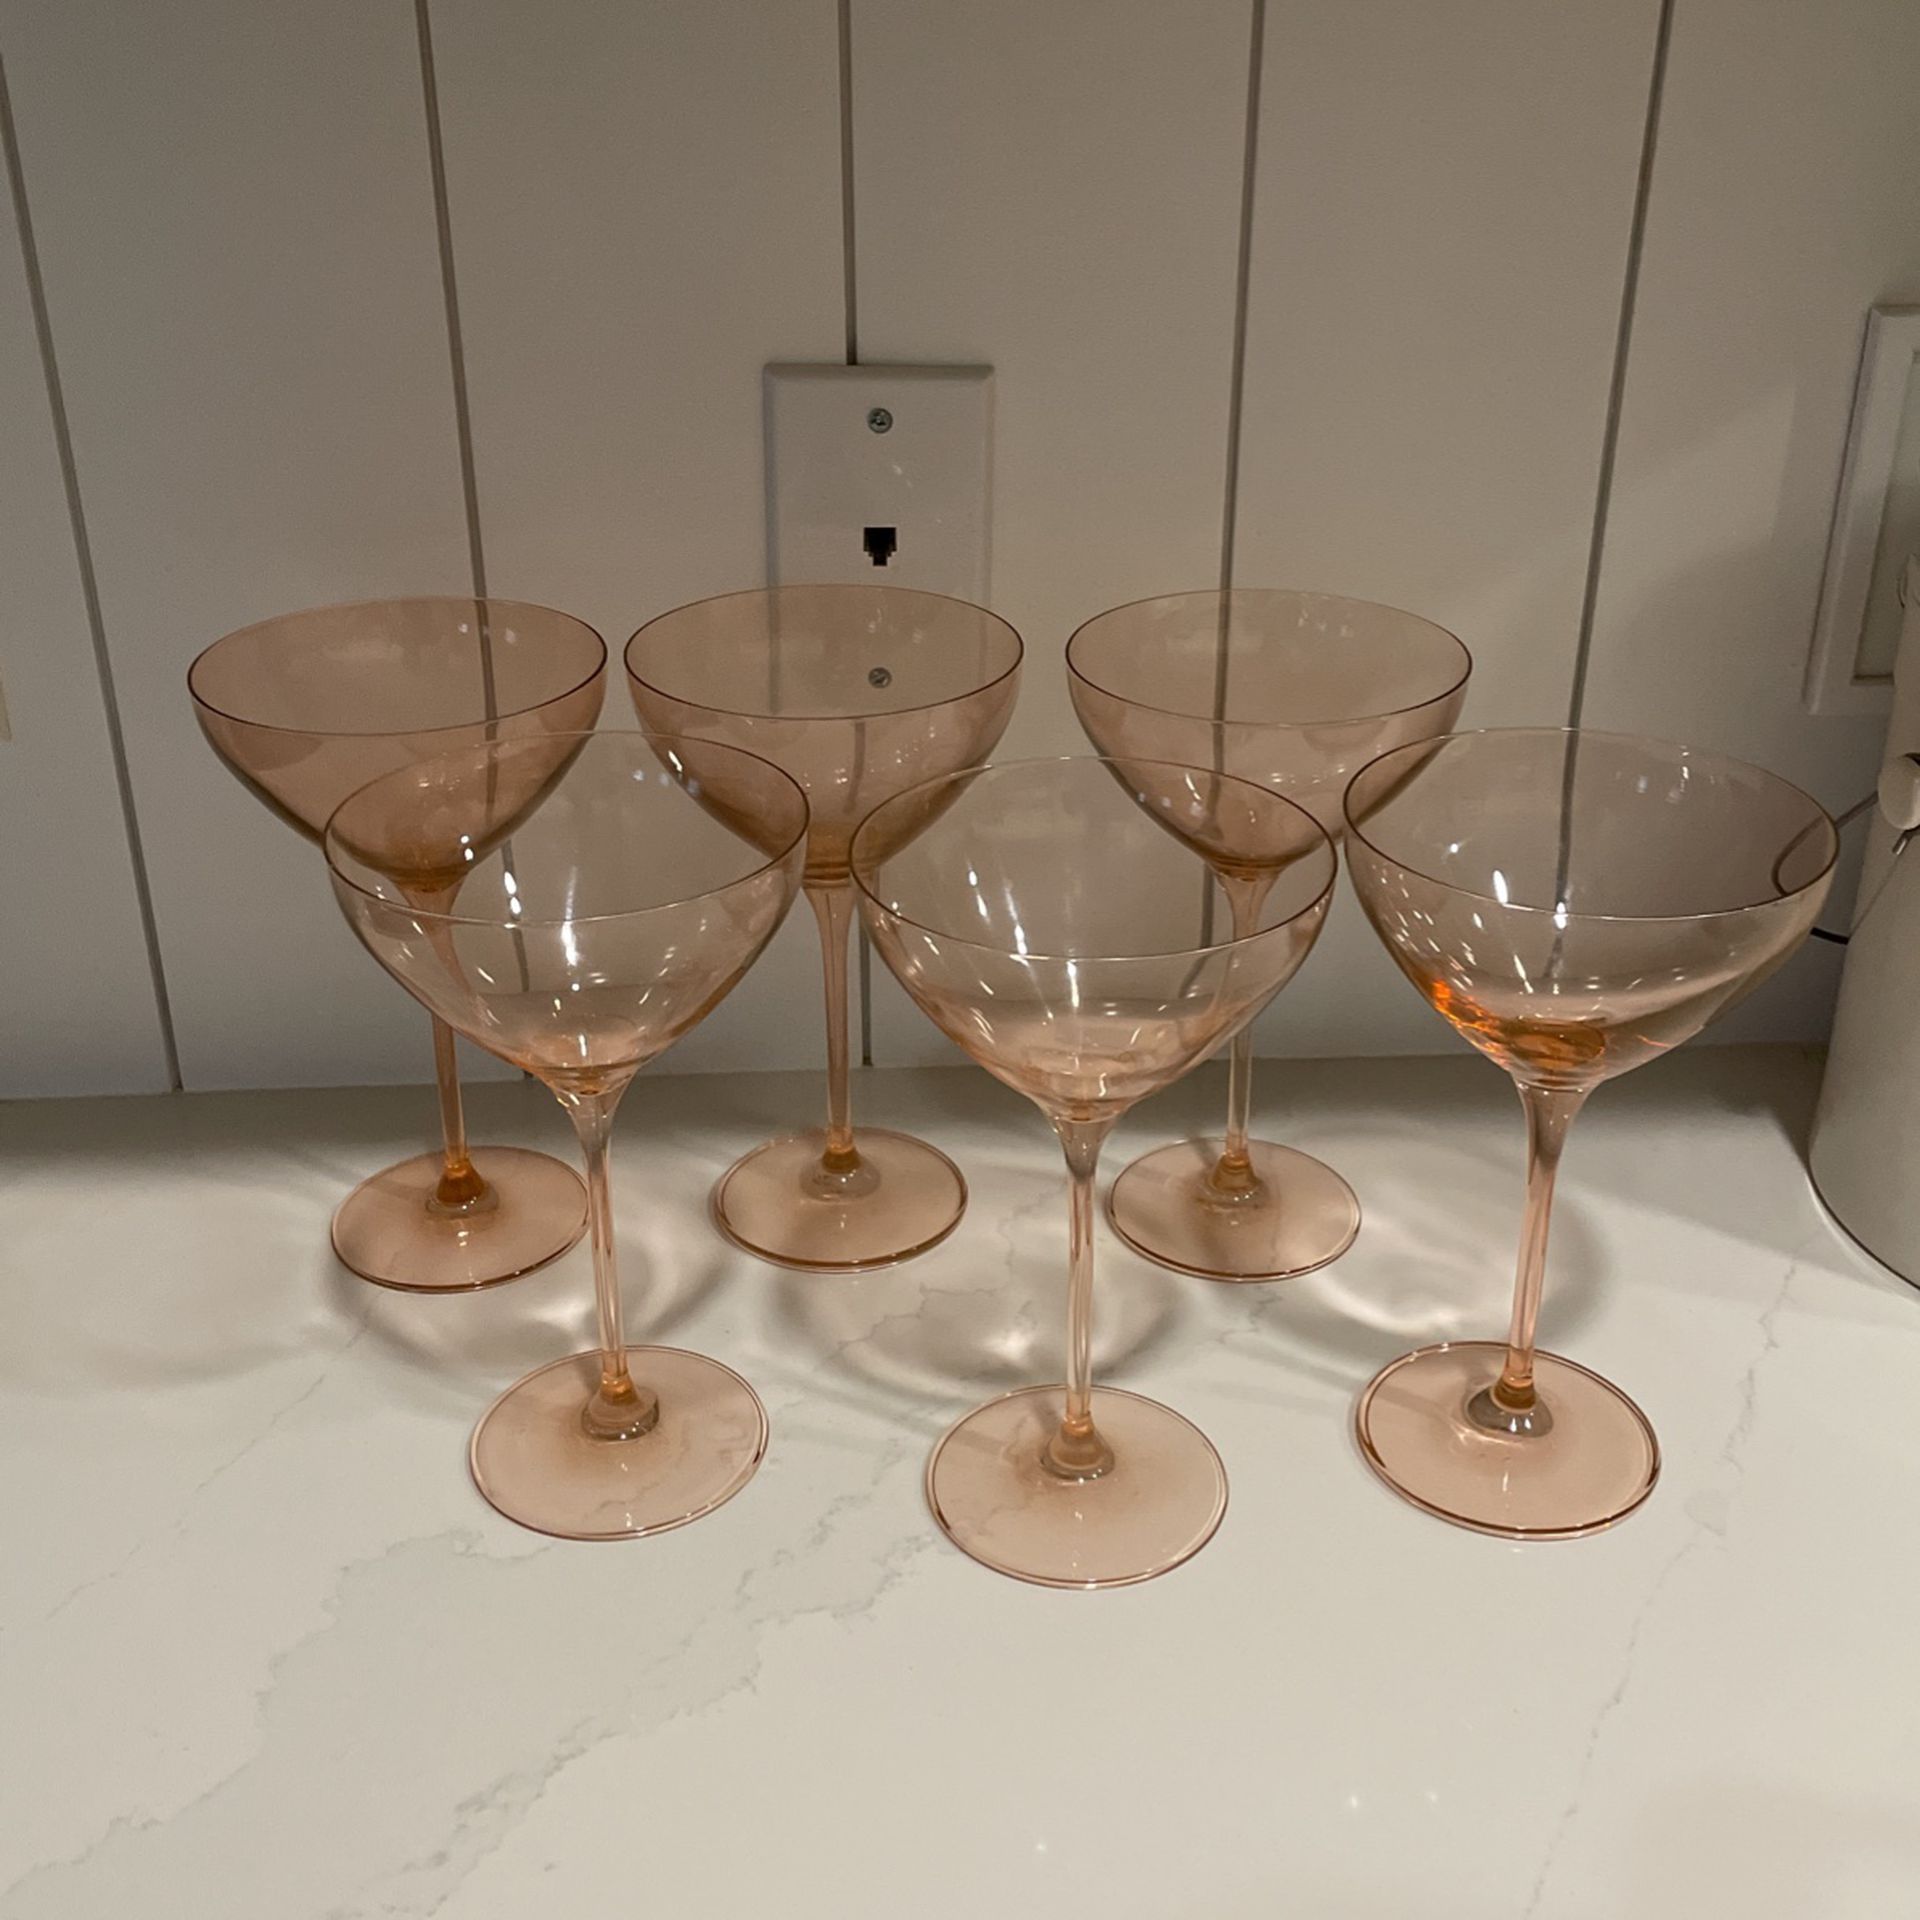 Estelle Martini Glasses